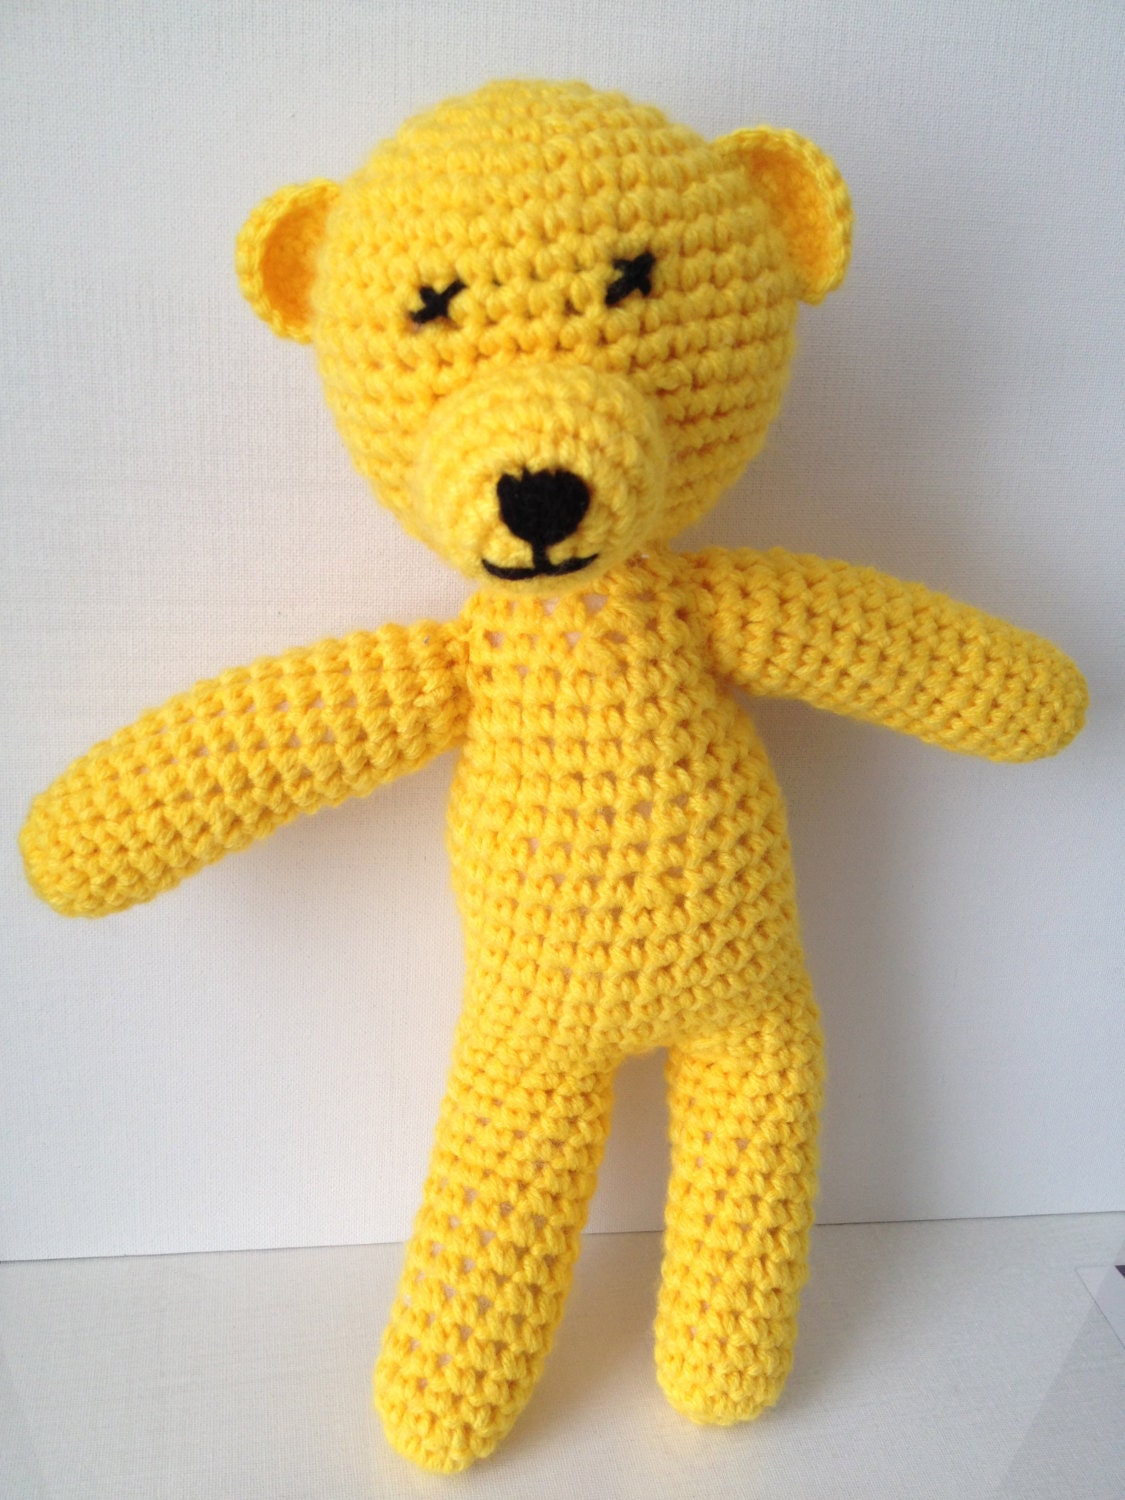 Benny the Yellow crocheted Bear - greediebird